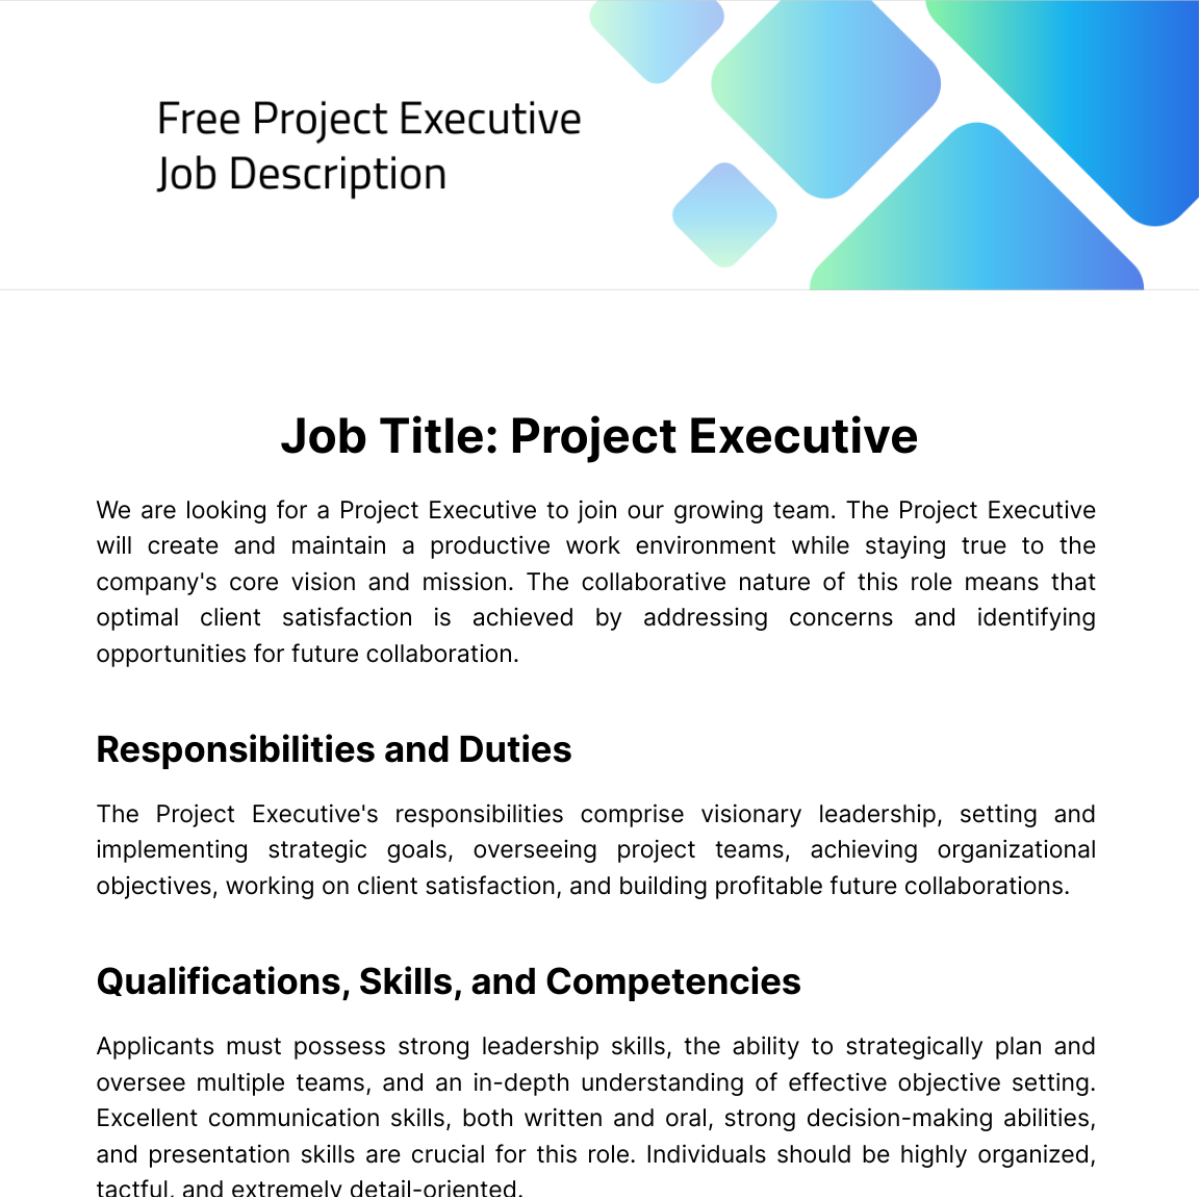 Free Project Executive Job Description Template